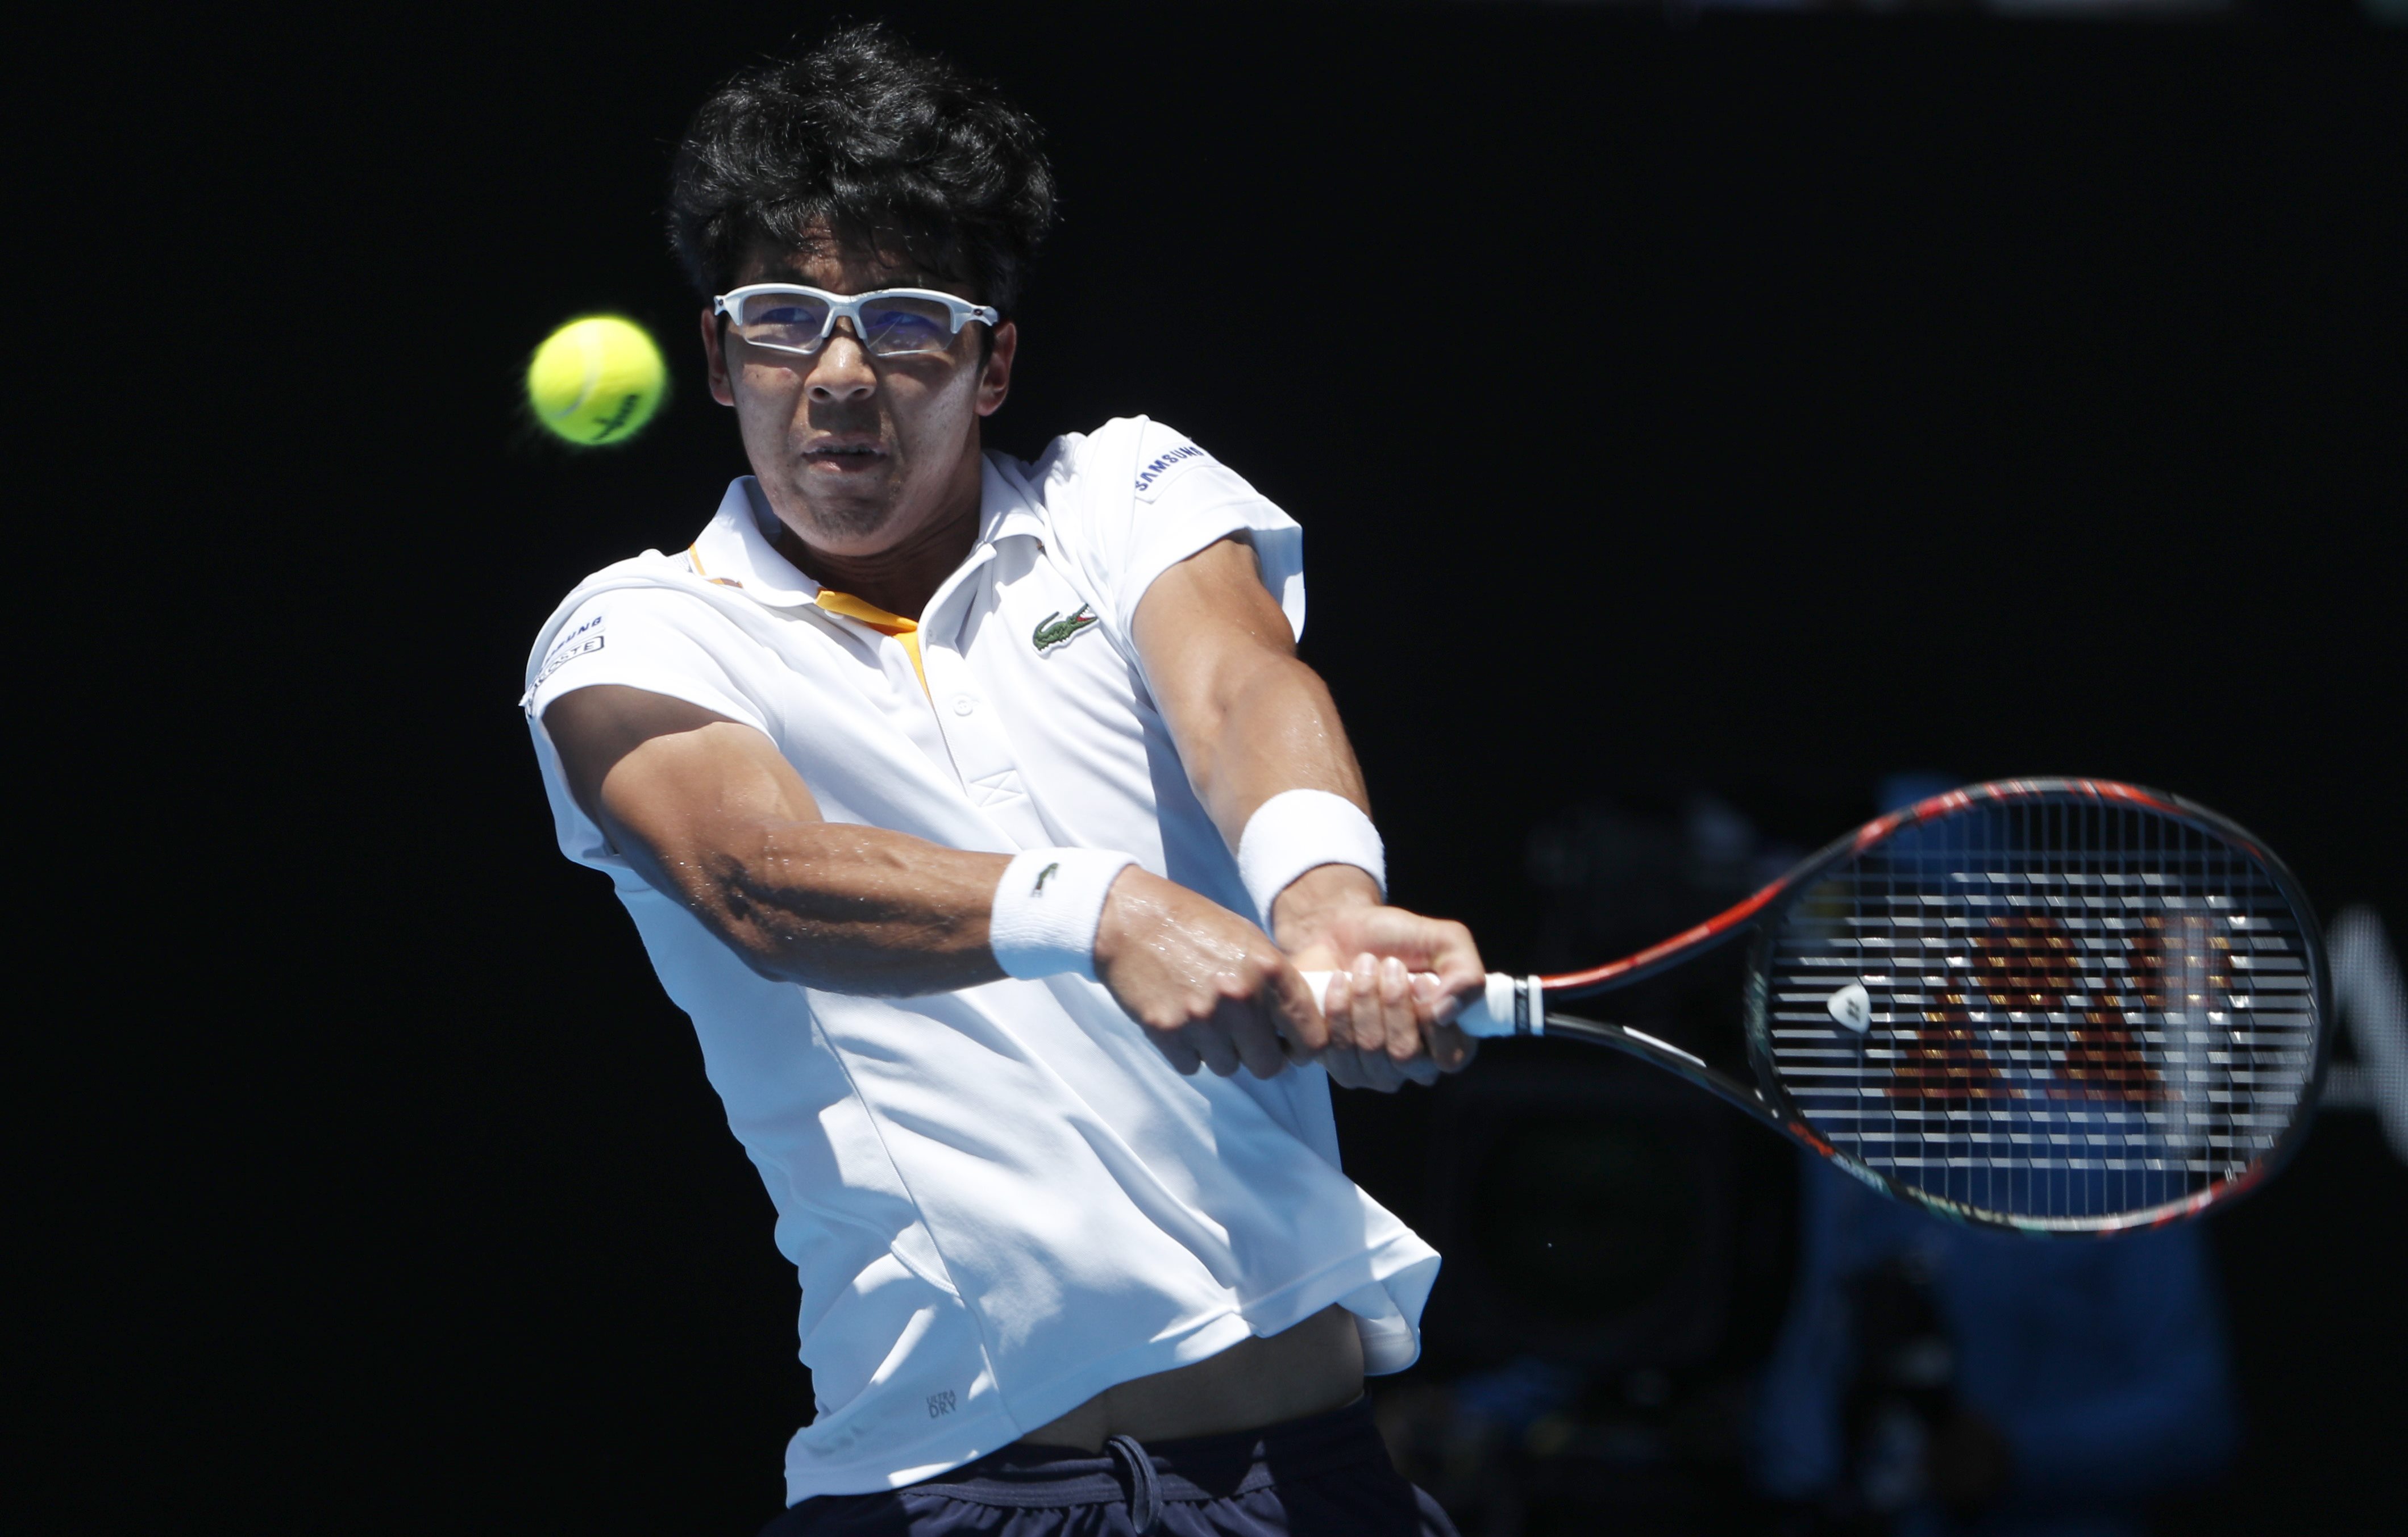 Chung becomes South Korea's first Grand Slam semifinalist